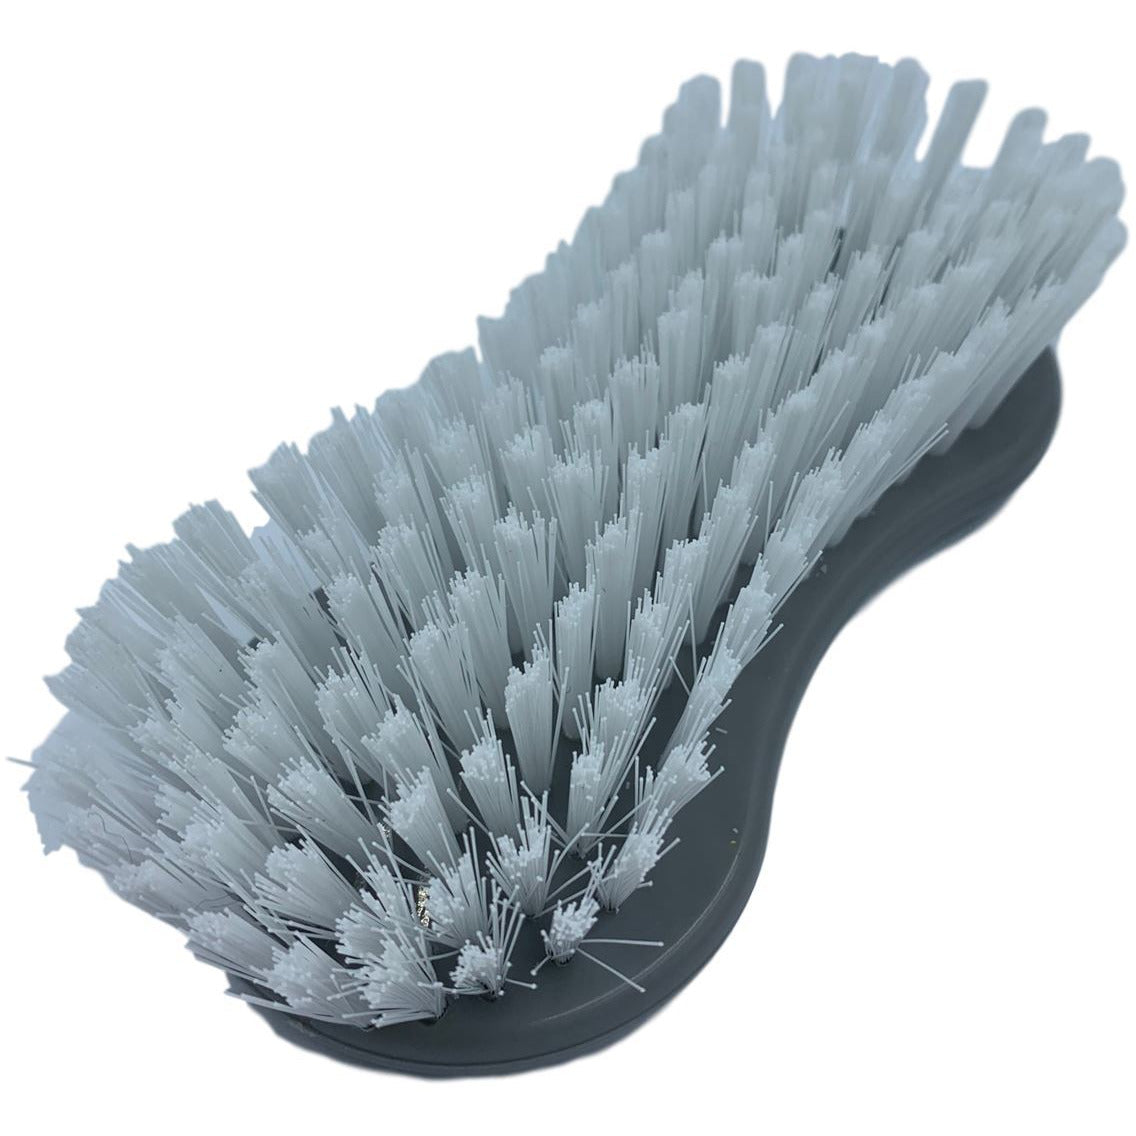 Silver / Grey Plastic Hand Scrubbing Scrub Brush - The Dustpan and Brush Store